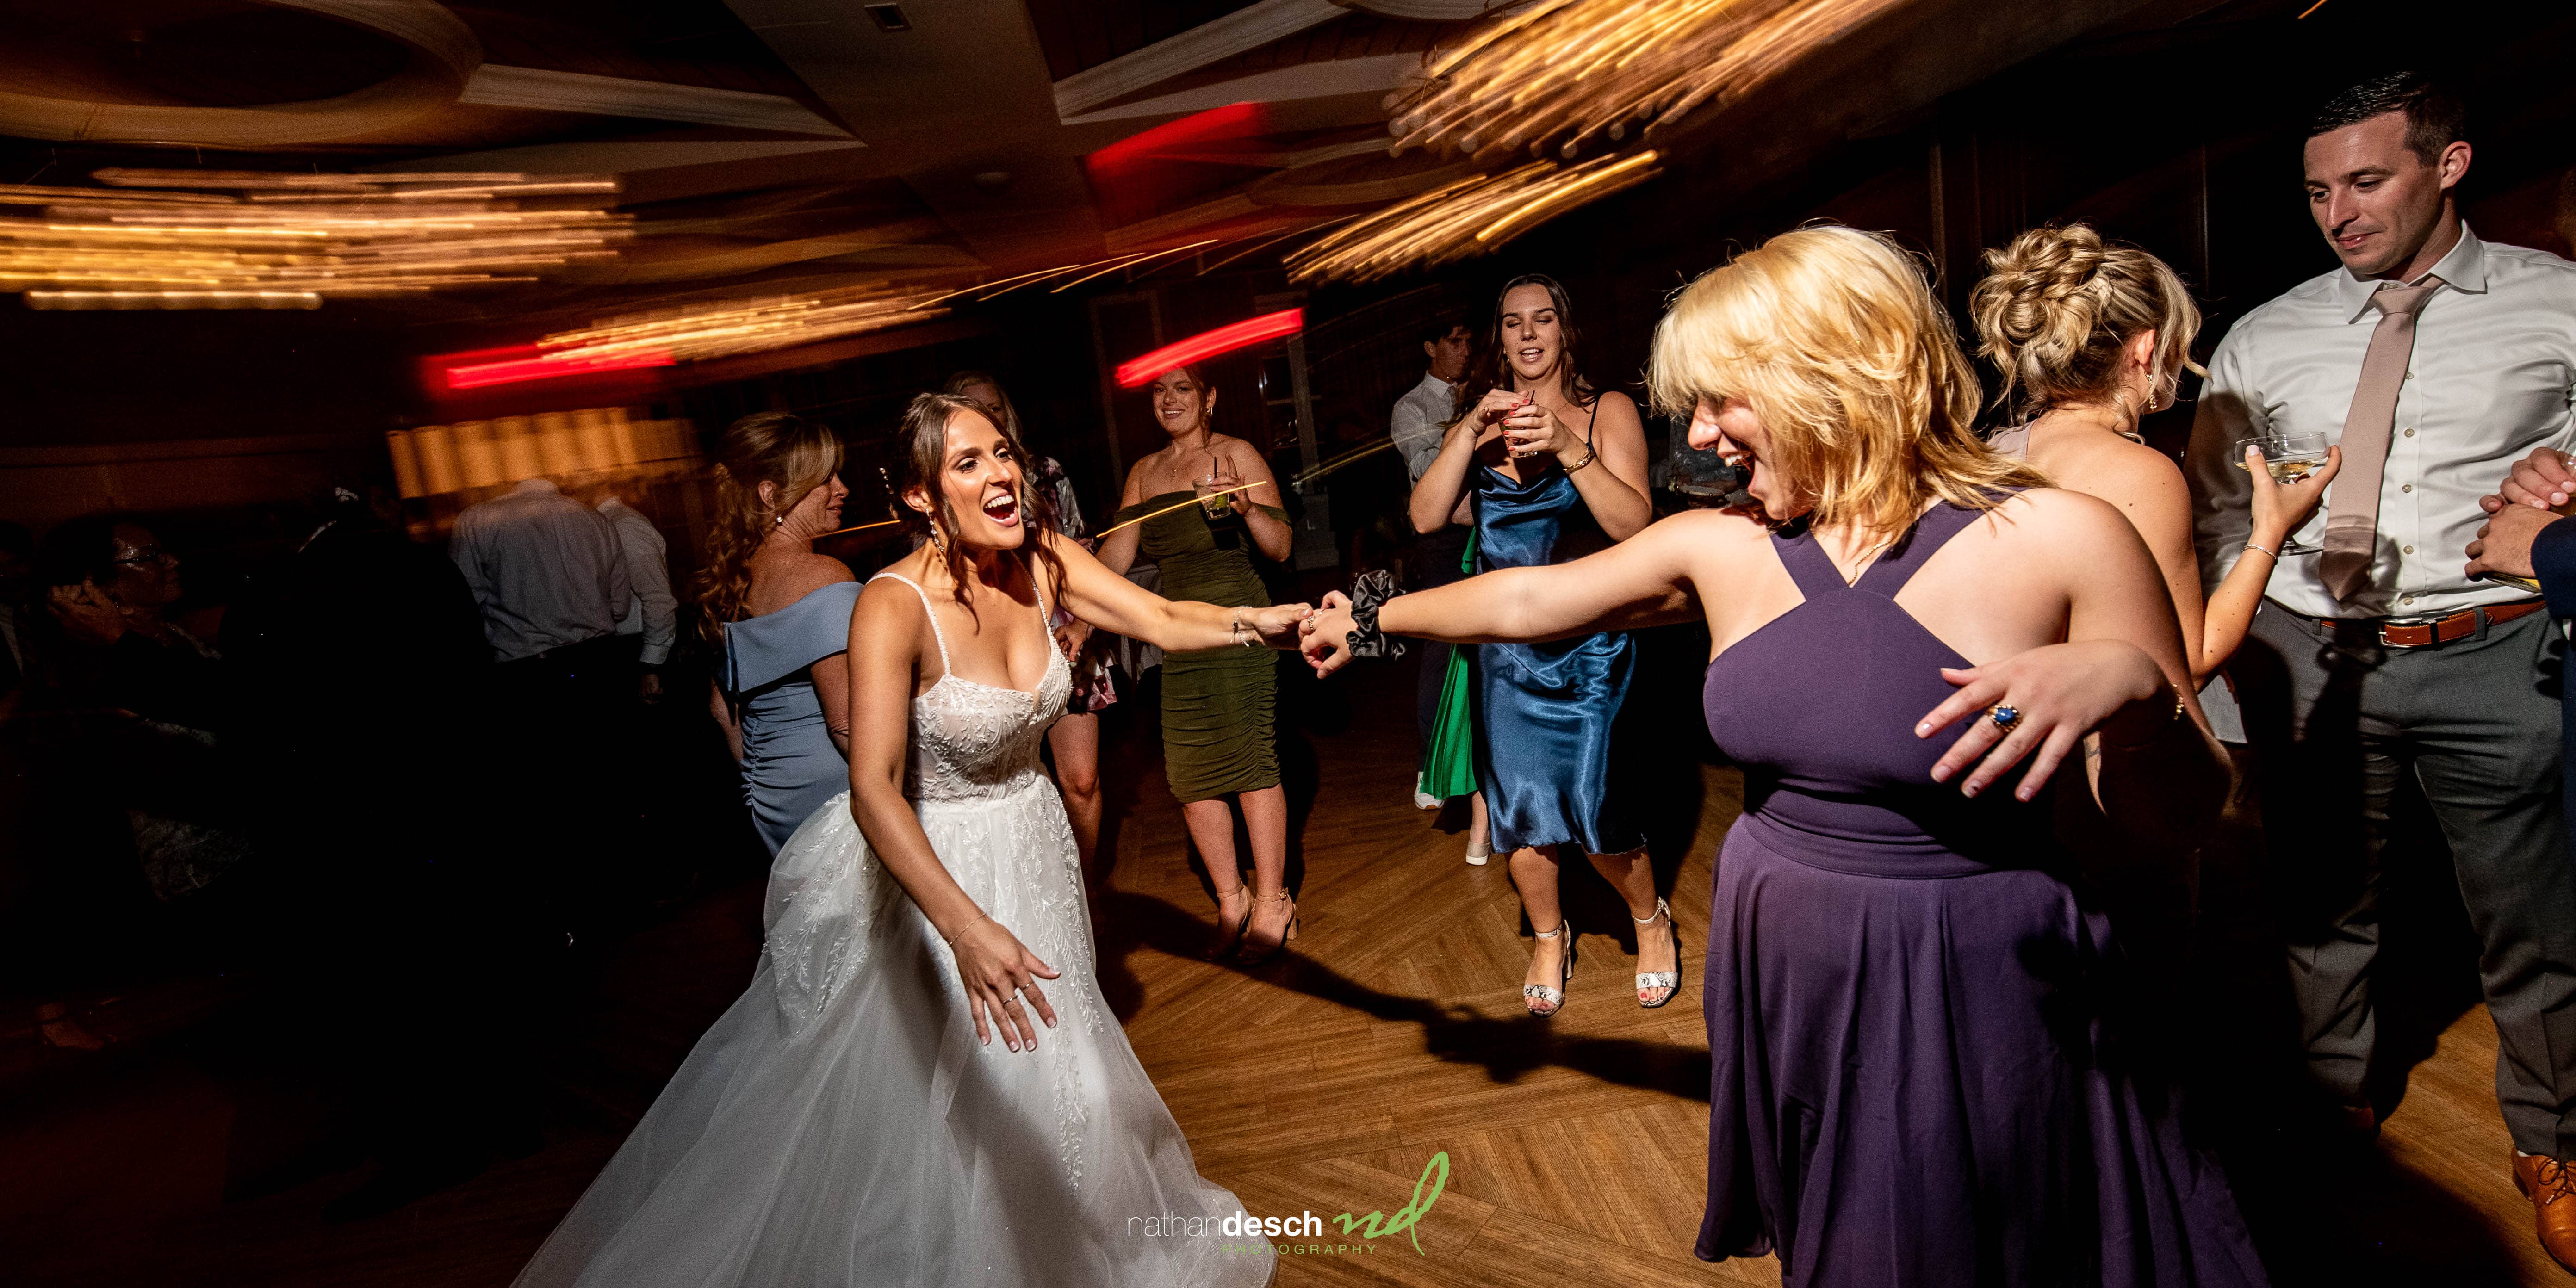 Bride on dance floor with motion blur